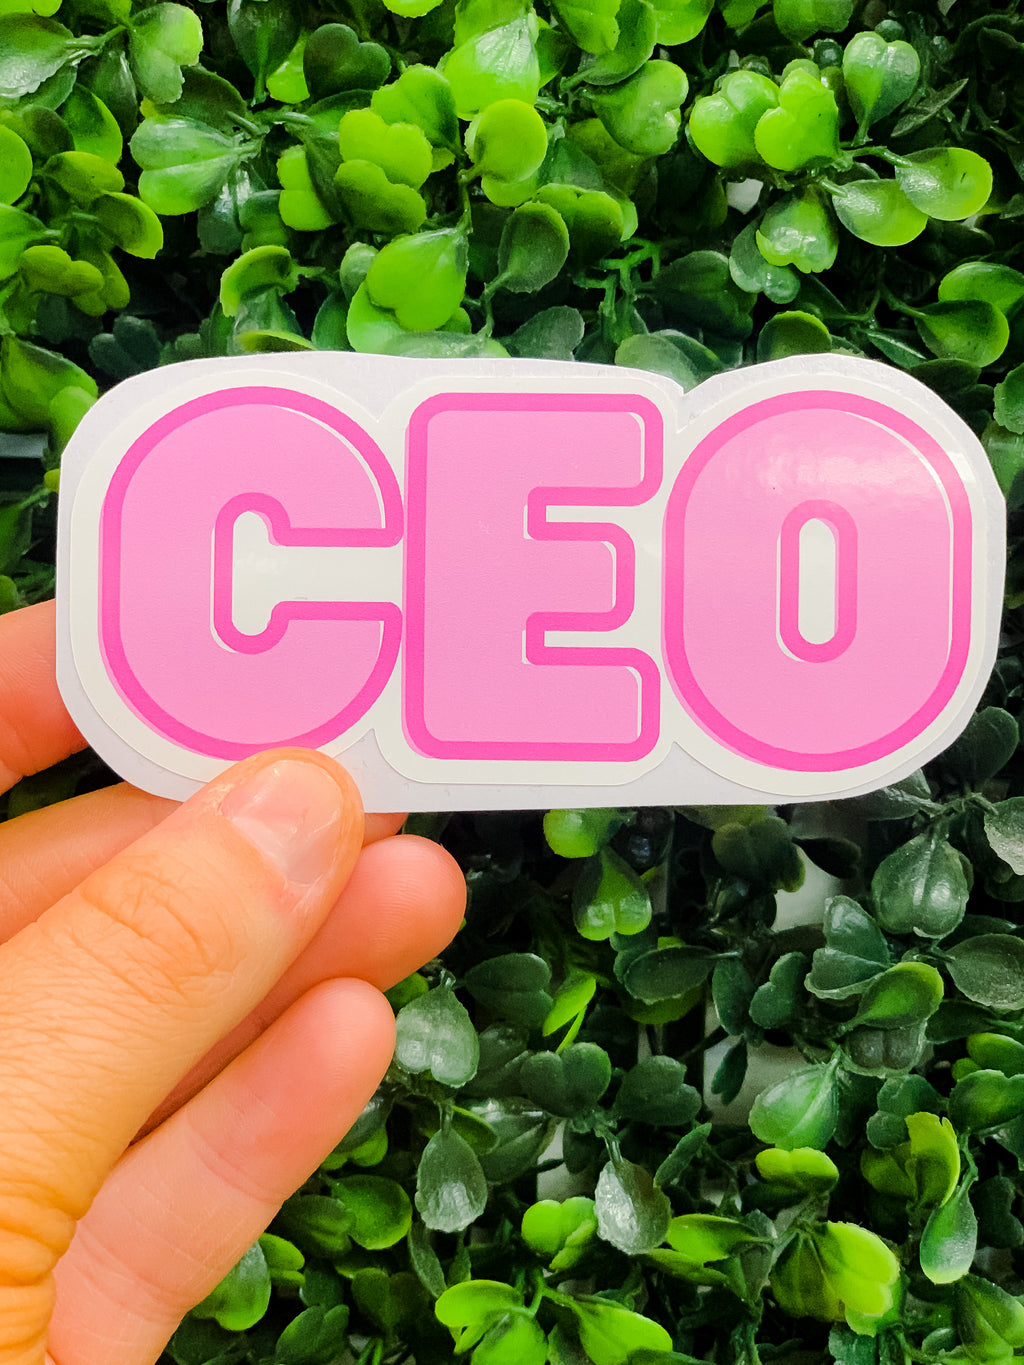 CEO Sticker Decal